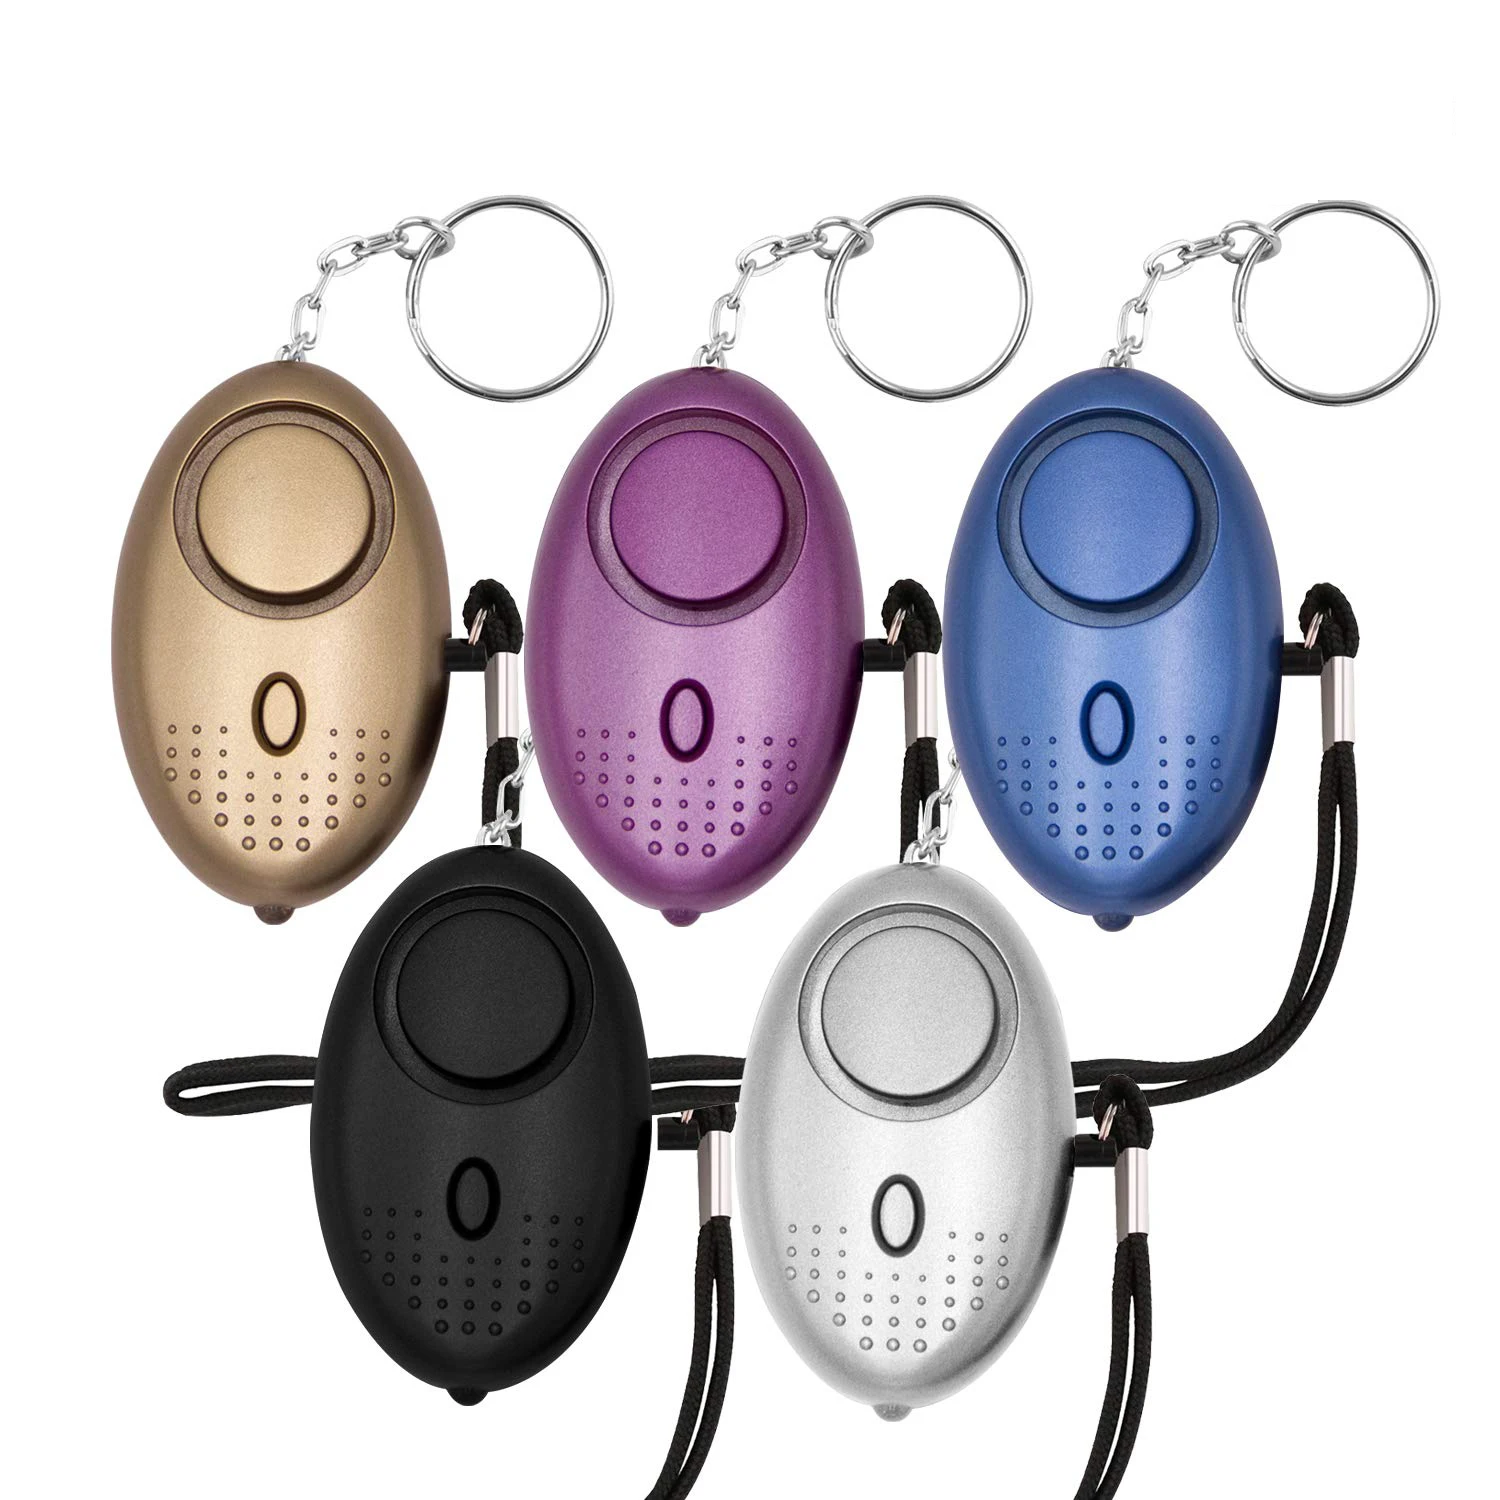 10Emergency Sound Personal Alarm Keychain 140dB Safe Self-Defense with LED Light 